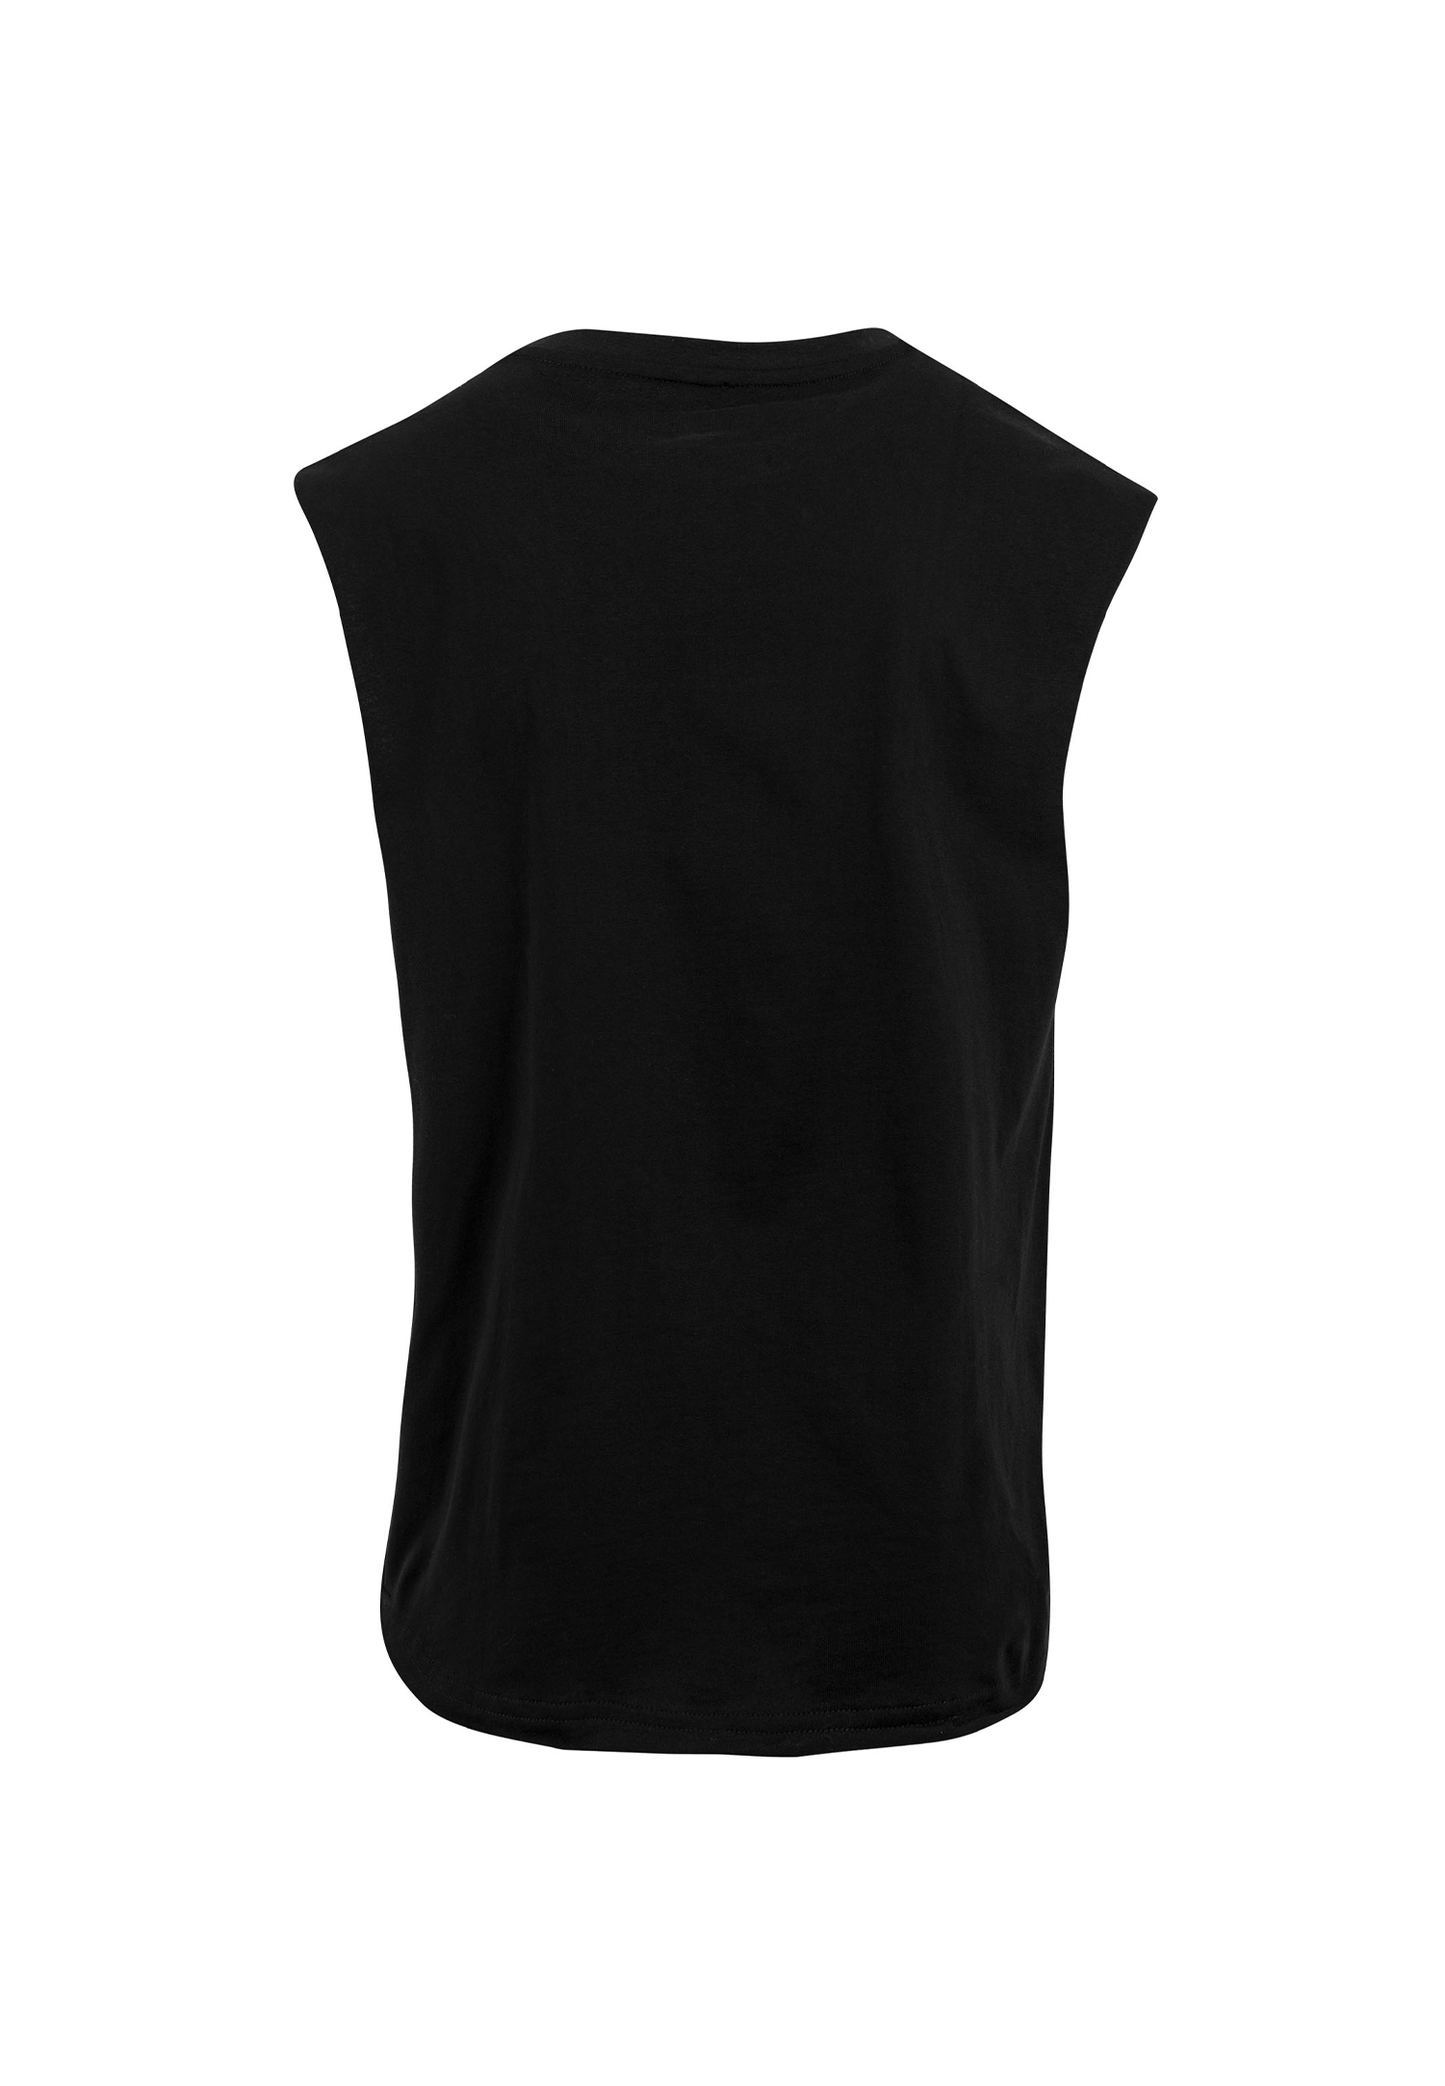 09°10 Sleeveless T-shirt, Black